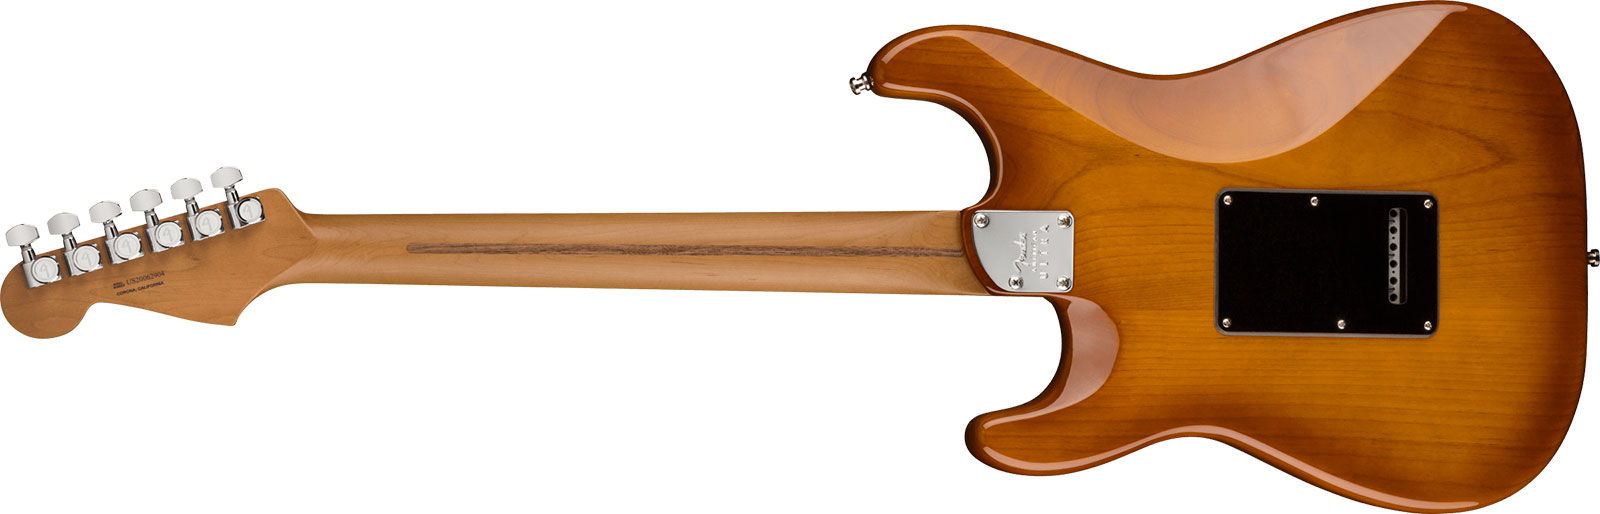 Fender Strat American Ultra Roasted Fretboard Ltd Usa 3s Trem Mn - Honey Burst - E-Gitarre in Str-Form - Variation 1